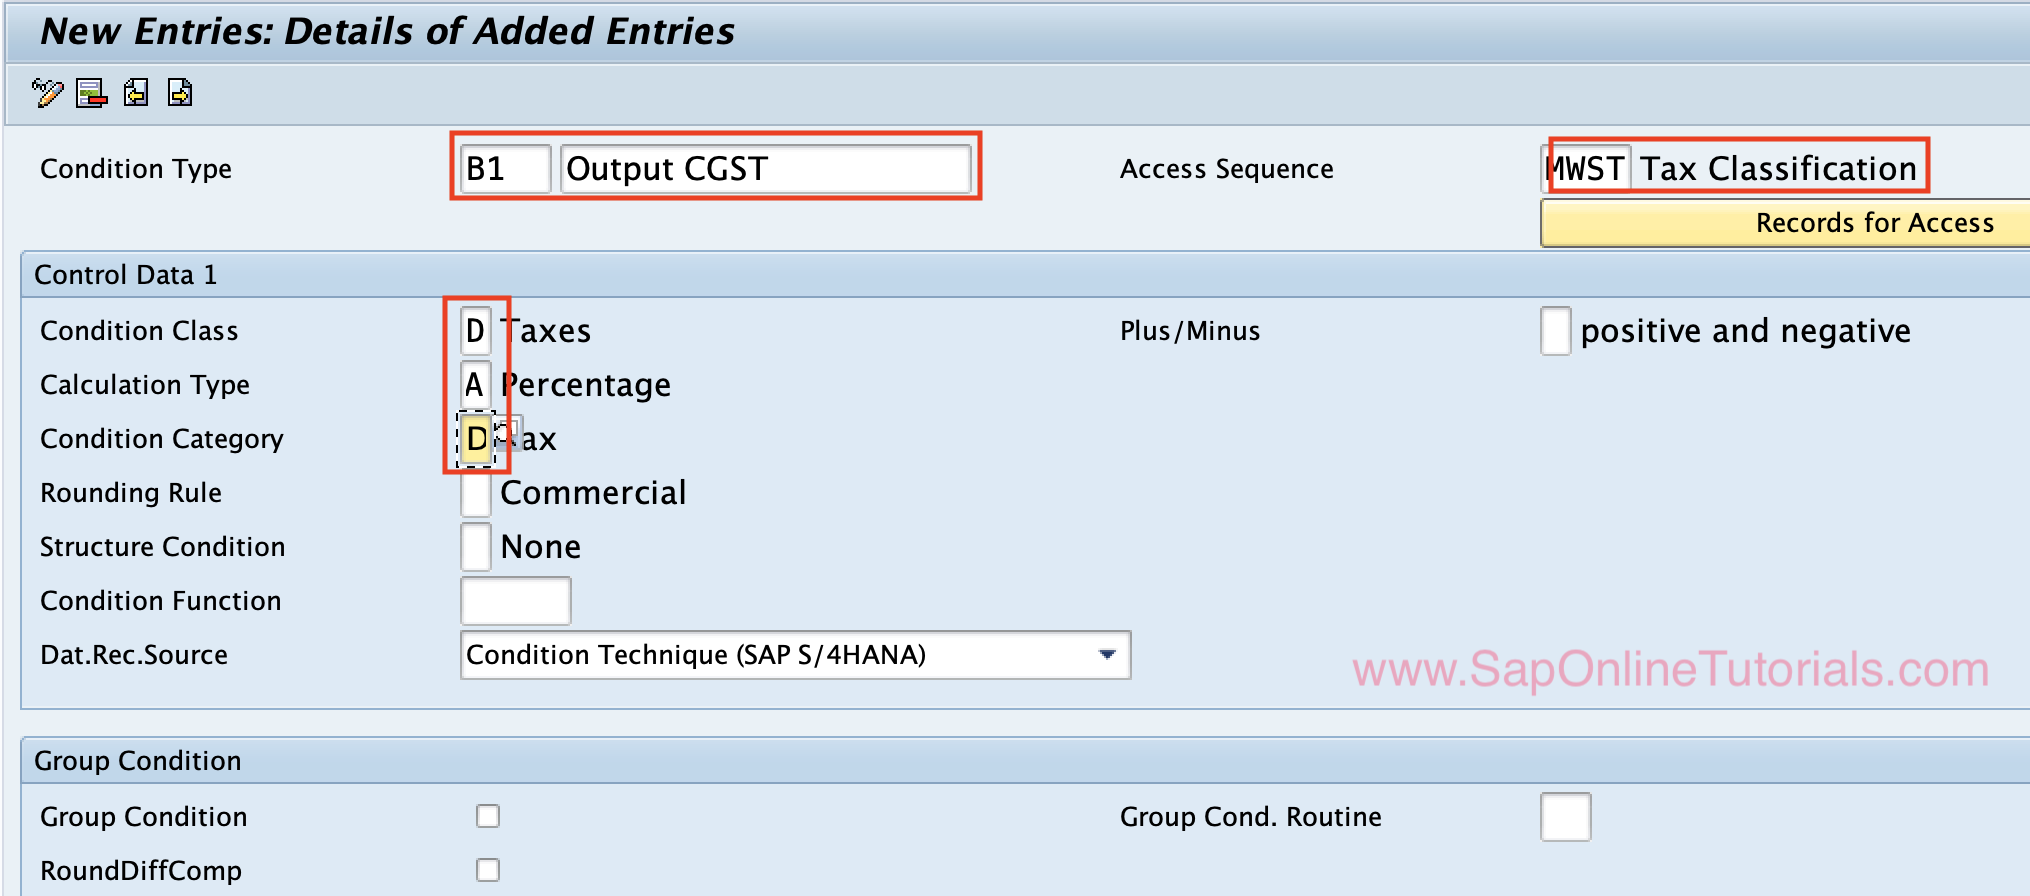 Condition Type- B1 - Output CGST SAP